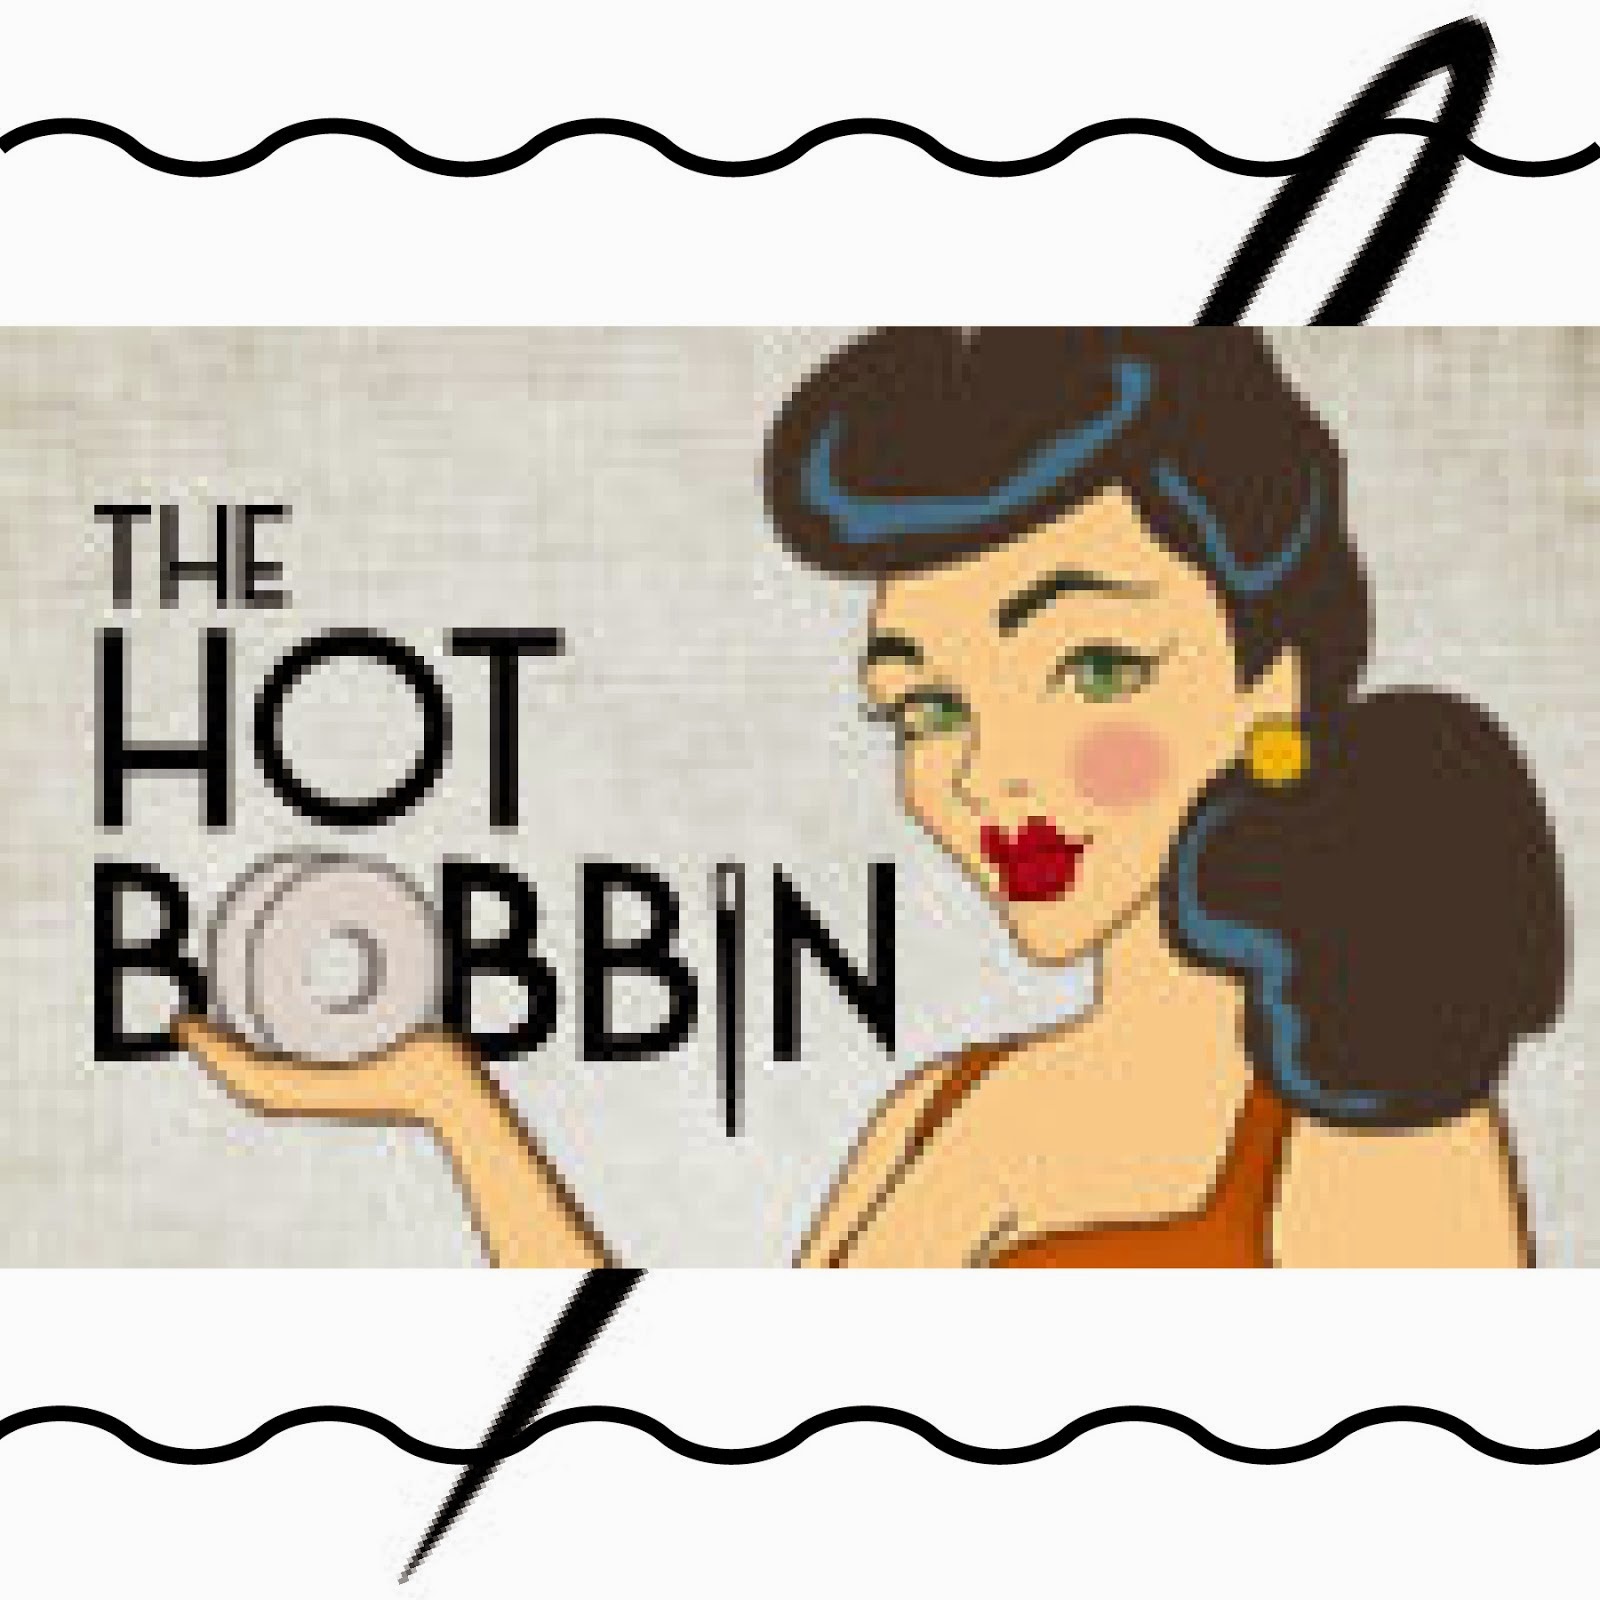 The Hot Bobbin on Etsy